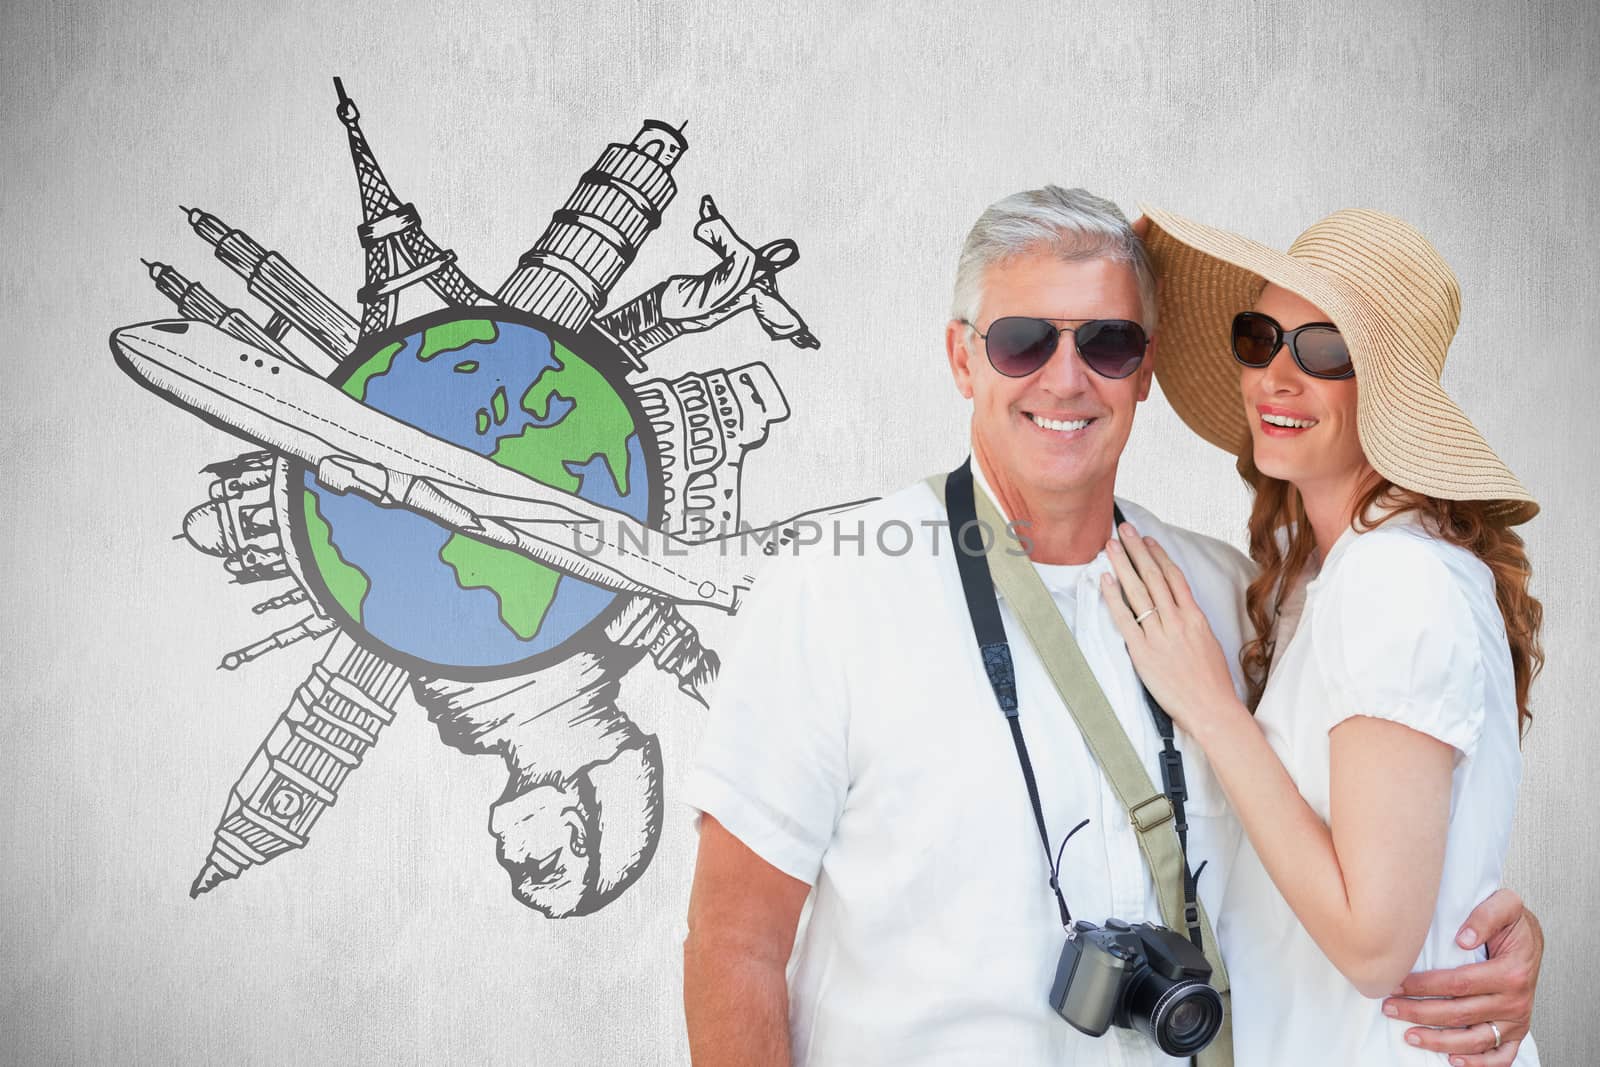 Vacationing couple against white background